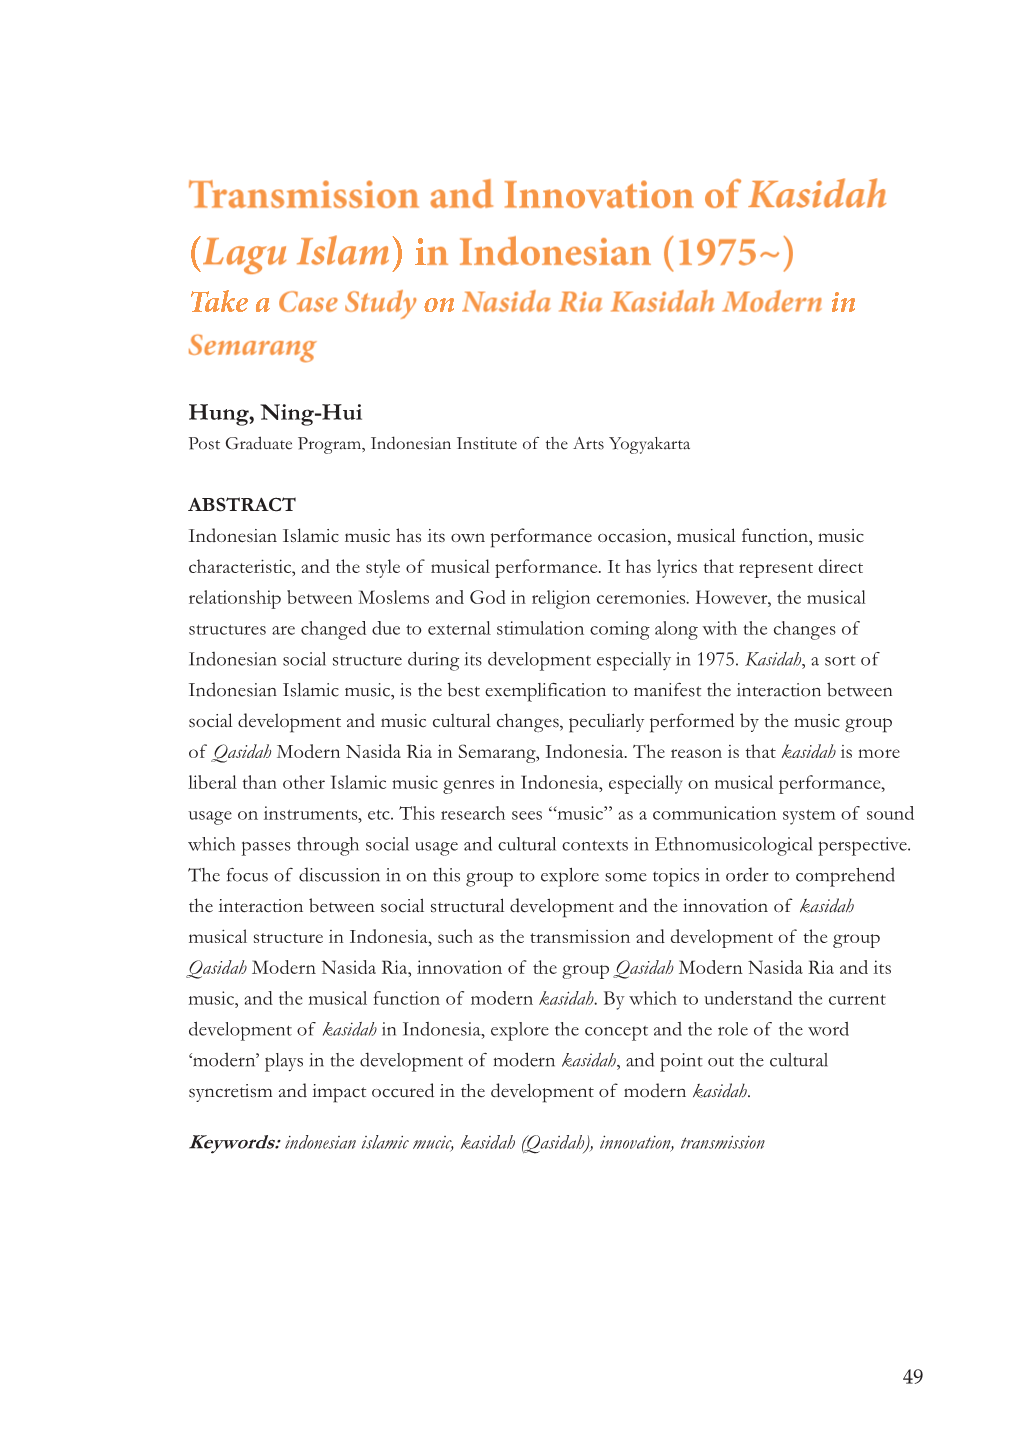 Hung, Ning-Hui Post Graduate Program, Indonesian Institute of the Arts Yogyakarta